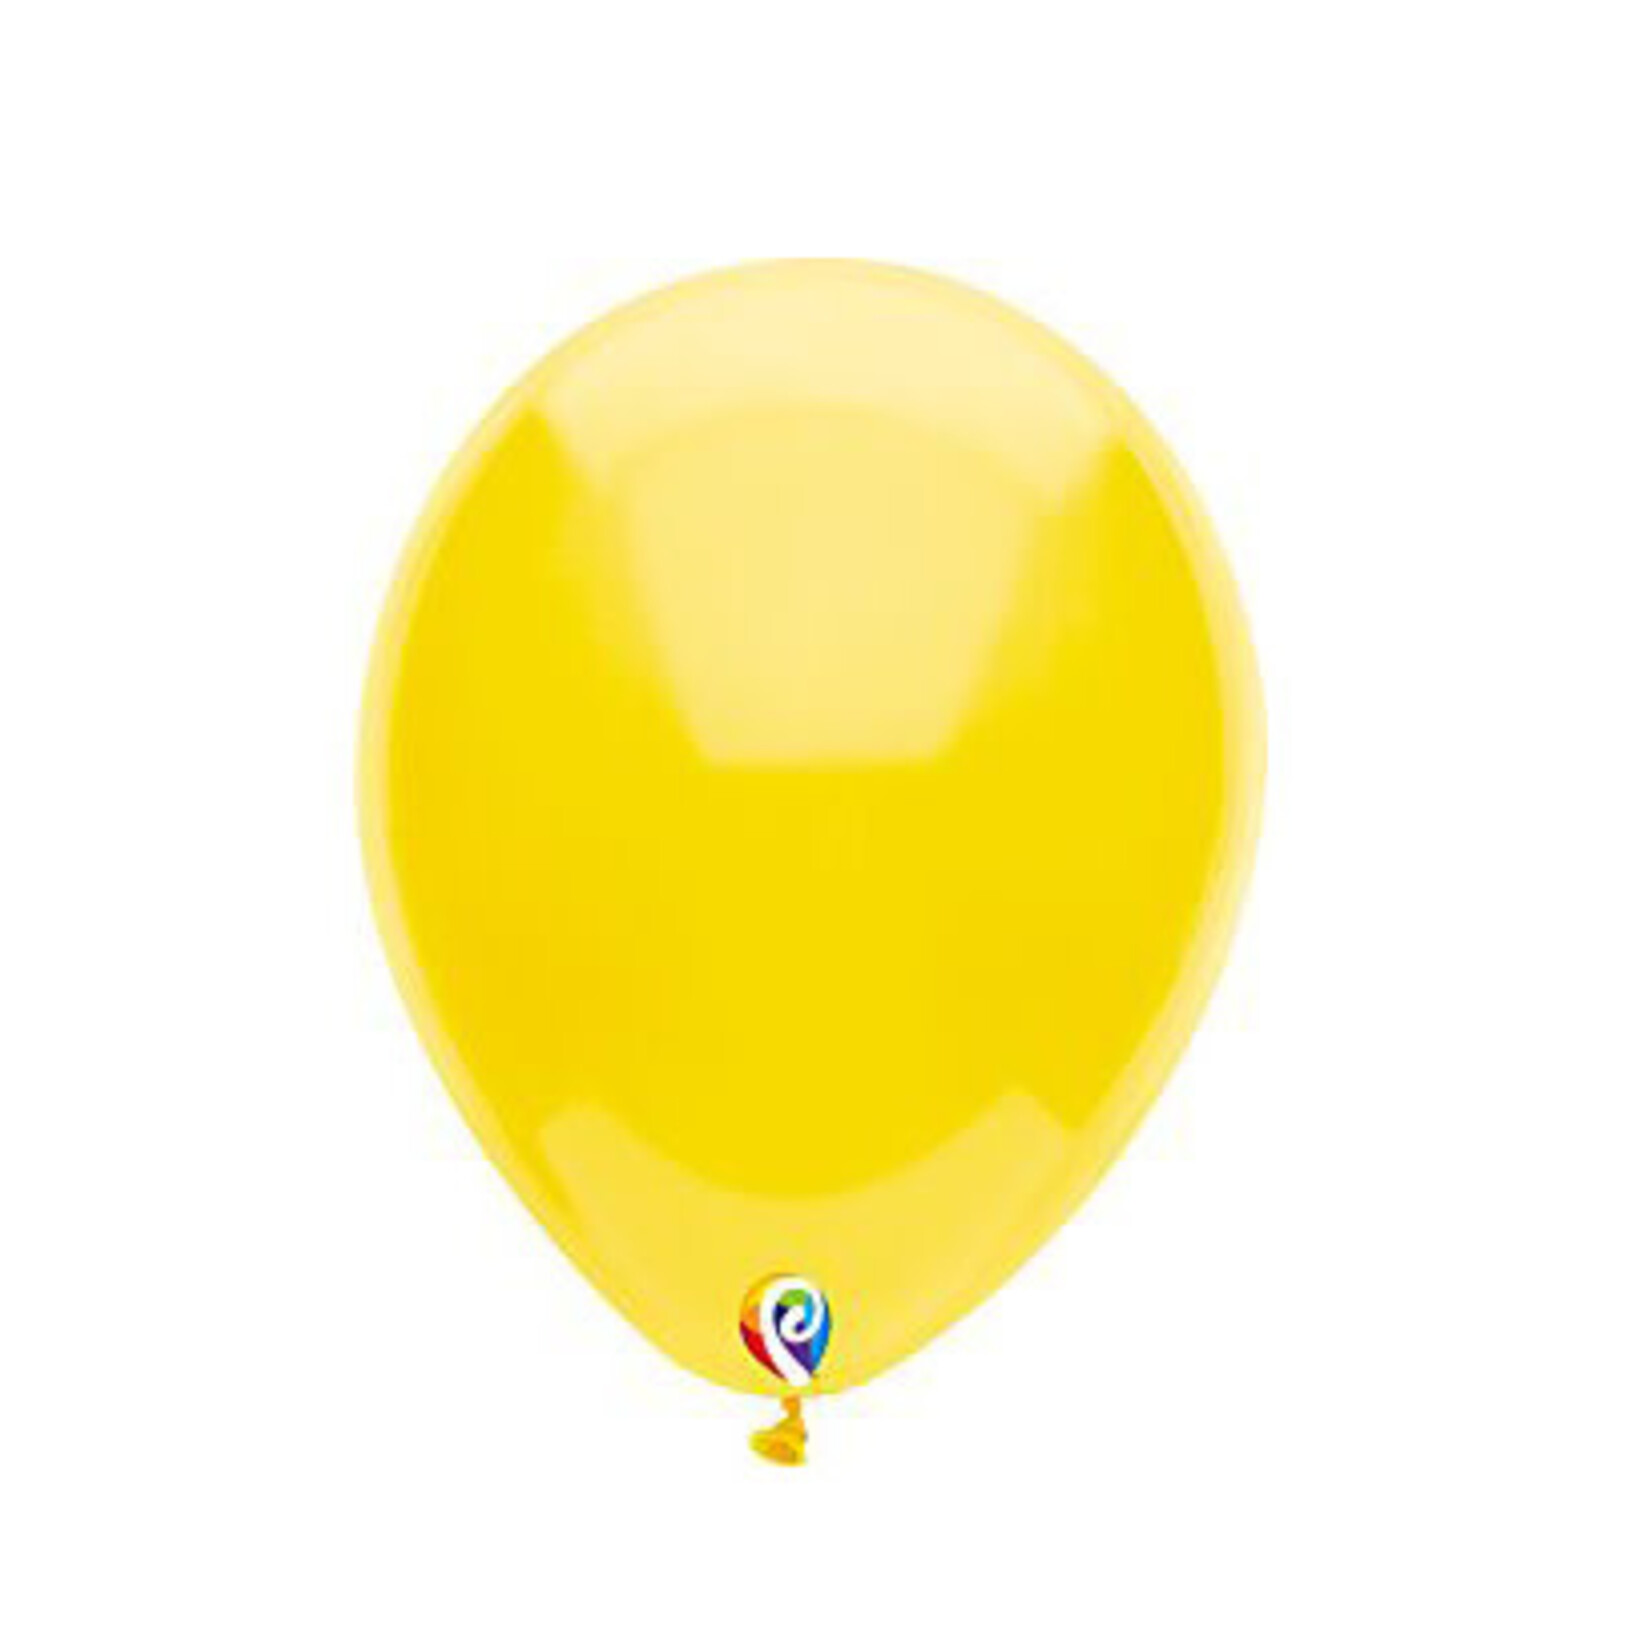 Funsational 12" Yellow Funsational Latex Balloons - 50ct.